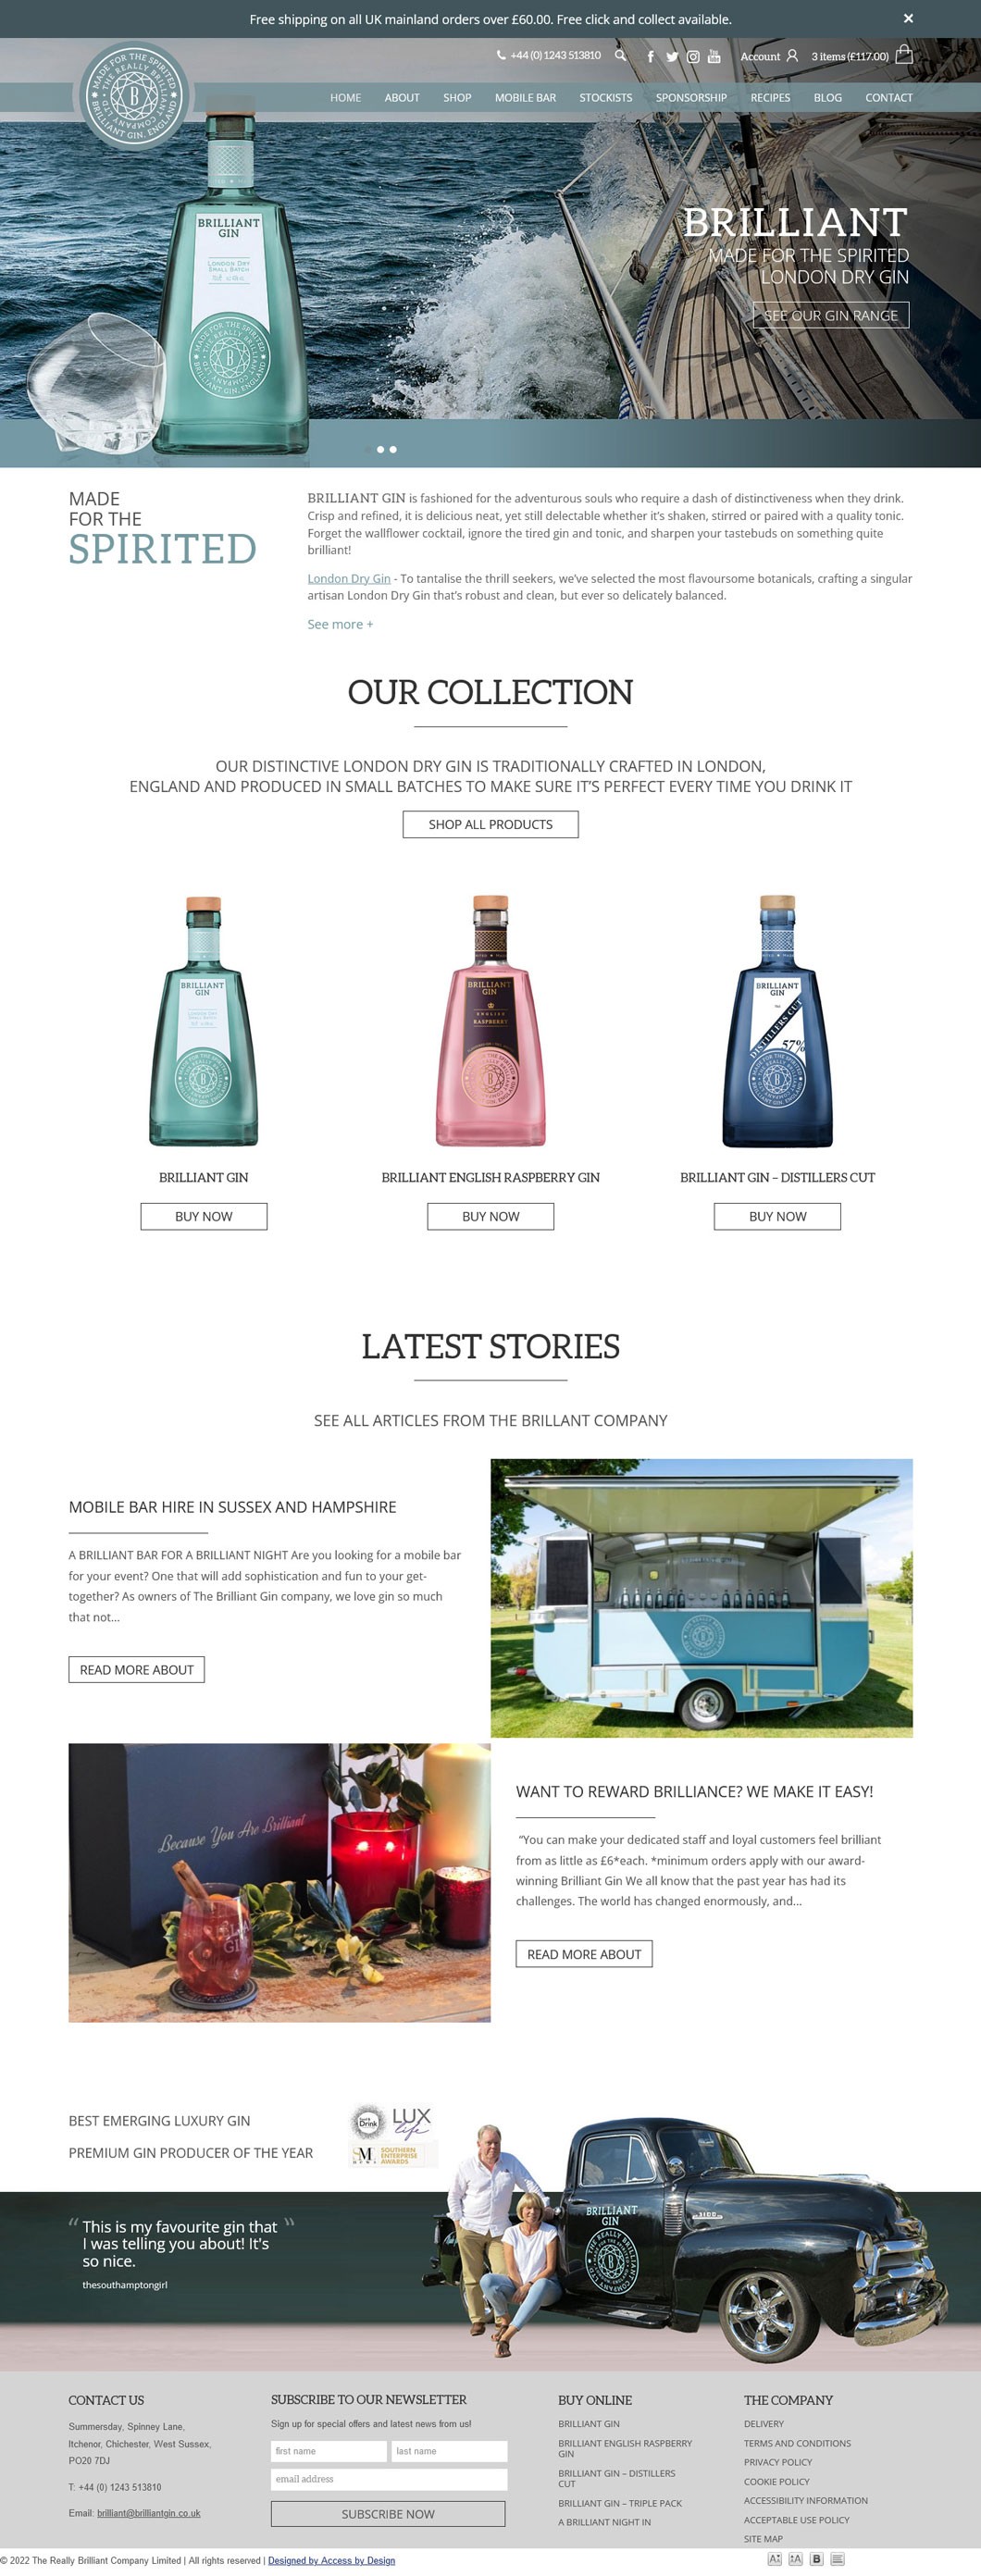 Brilliant Gin website homepage